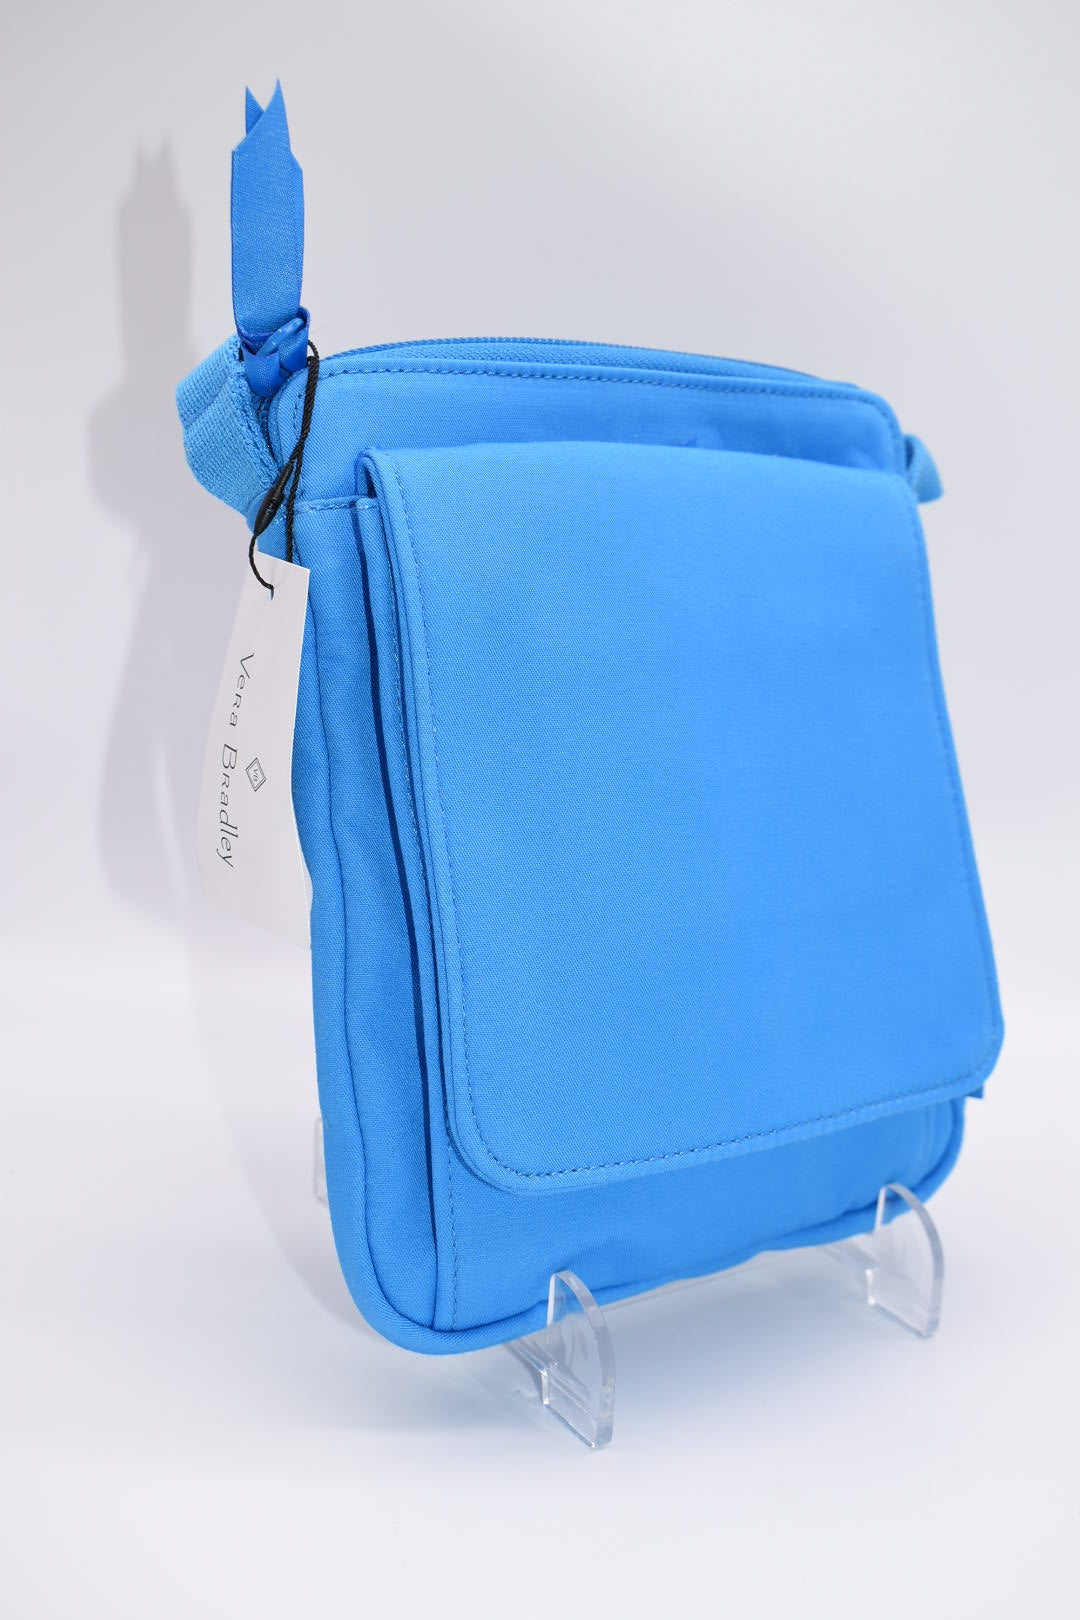 Vera Bradley RFID Mini Hipster Crossbody Bag in Blue Aster